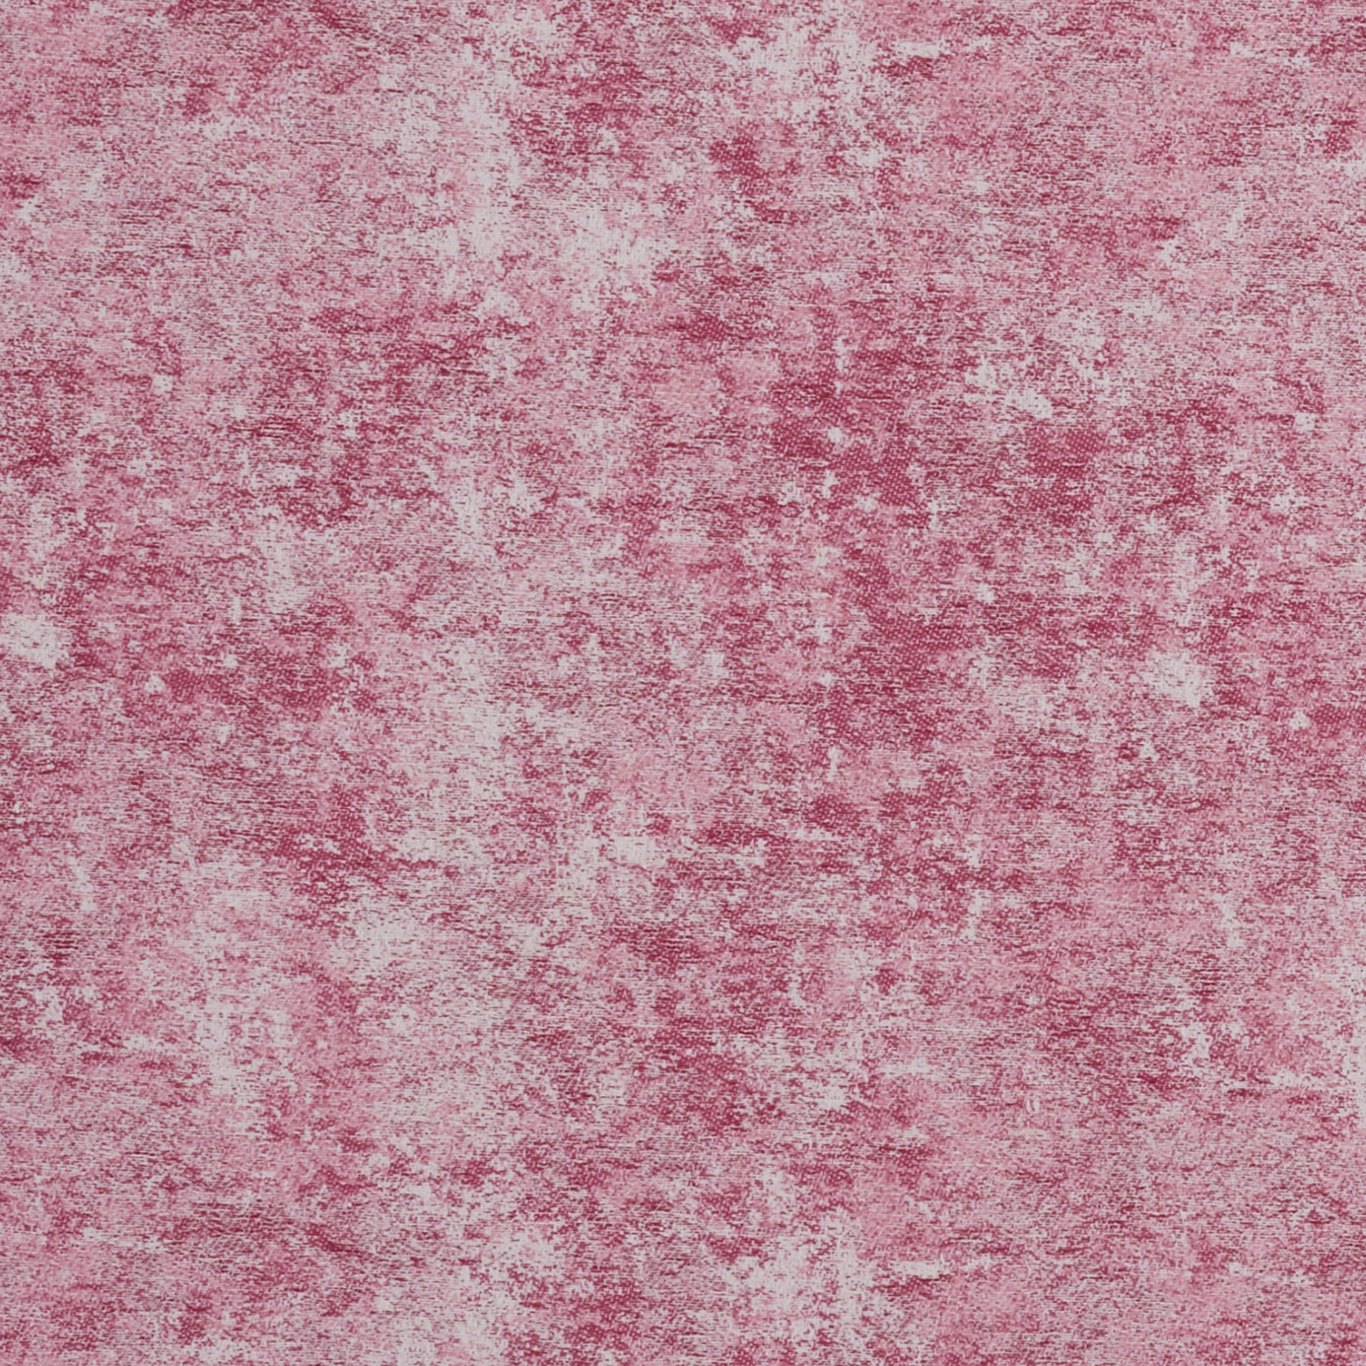 Vesta Raspberry Fabric by STG